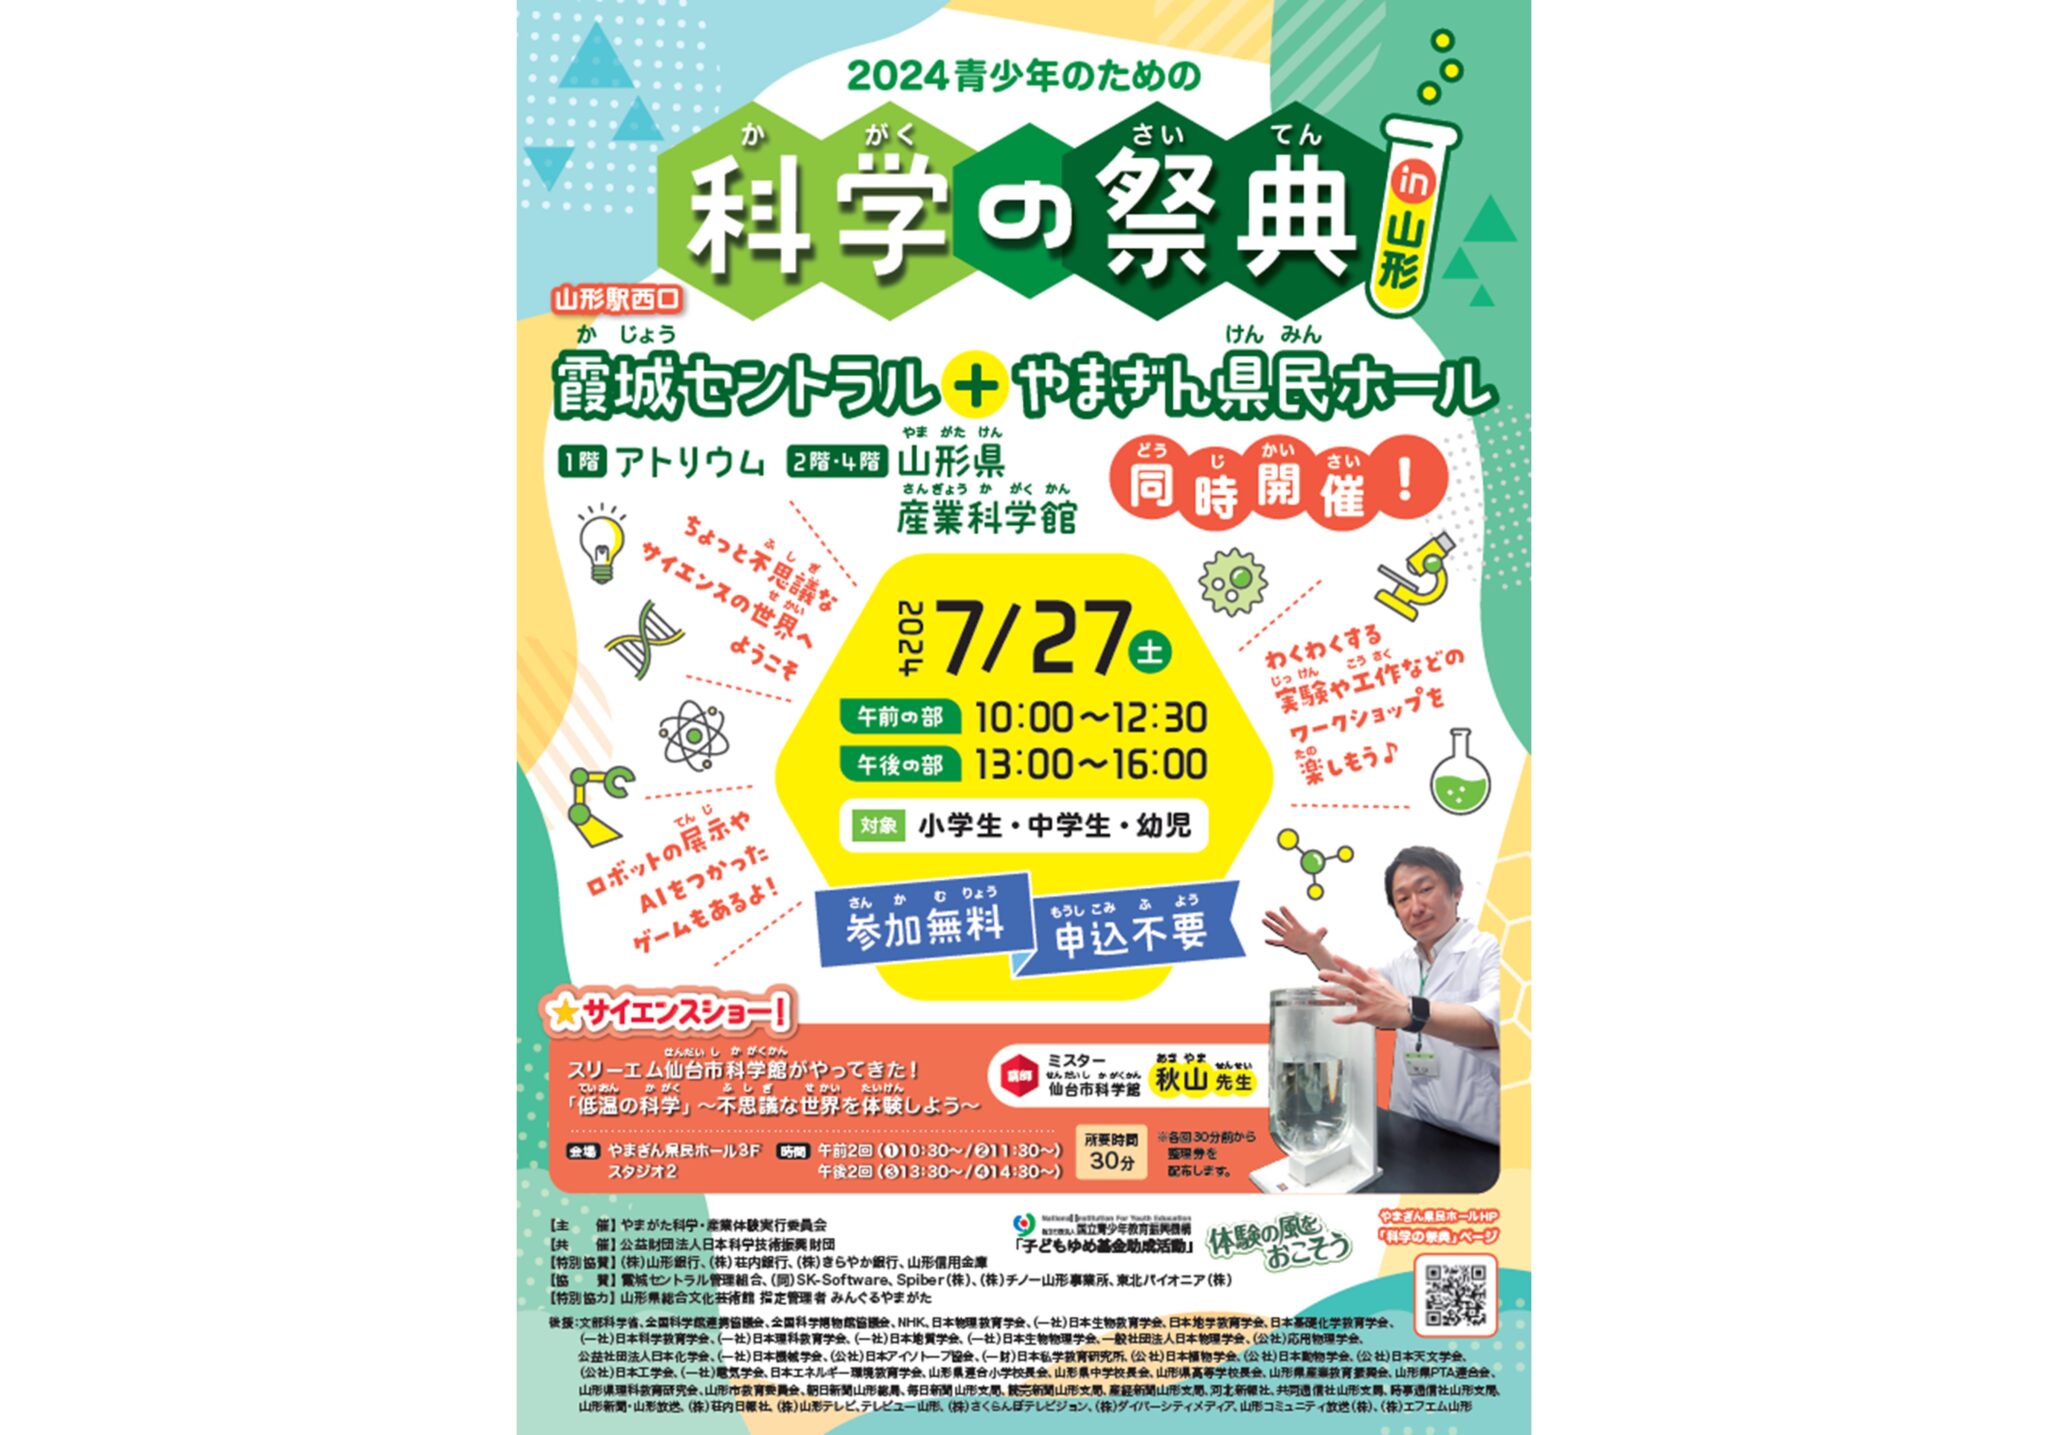 2024 Youth Science Fair in Yamagata